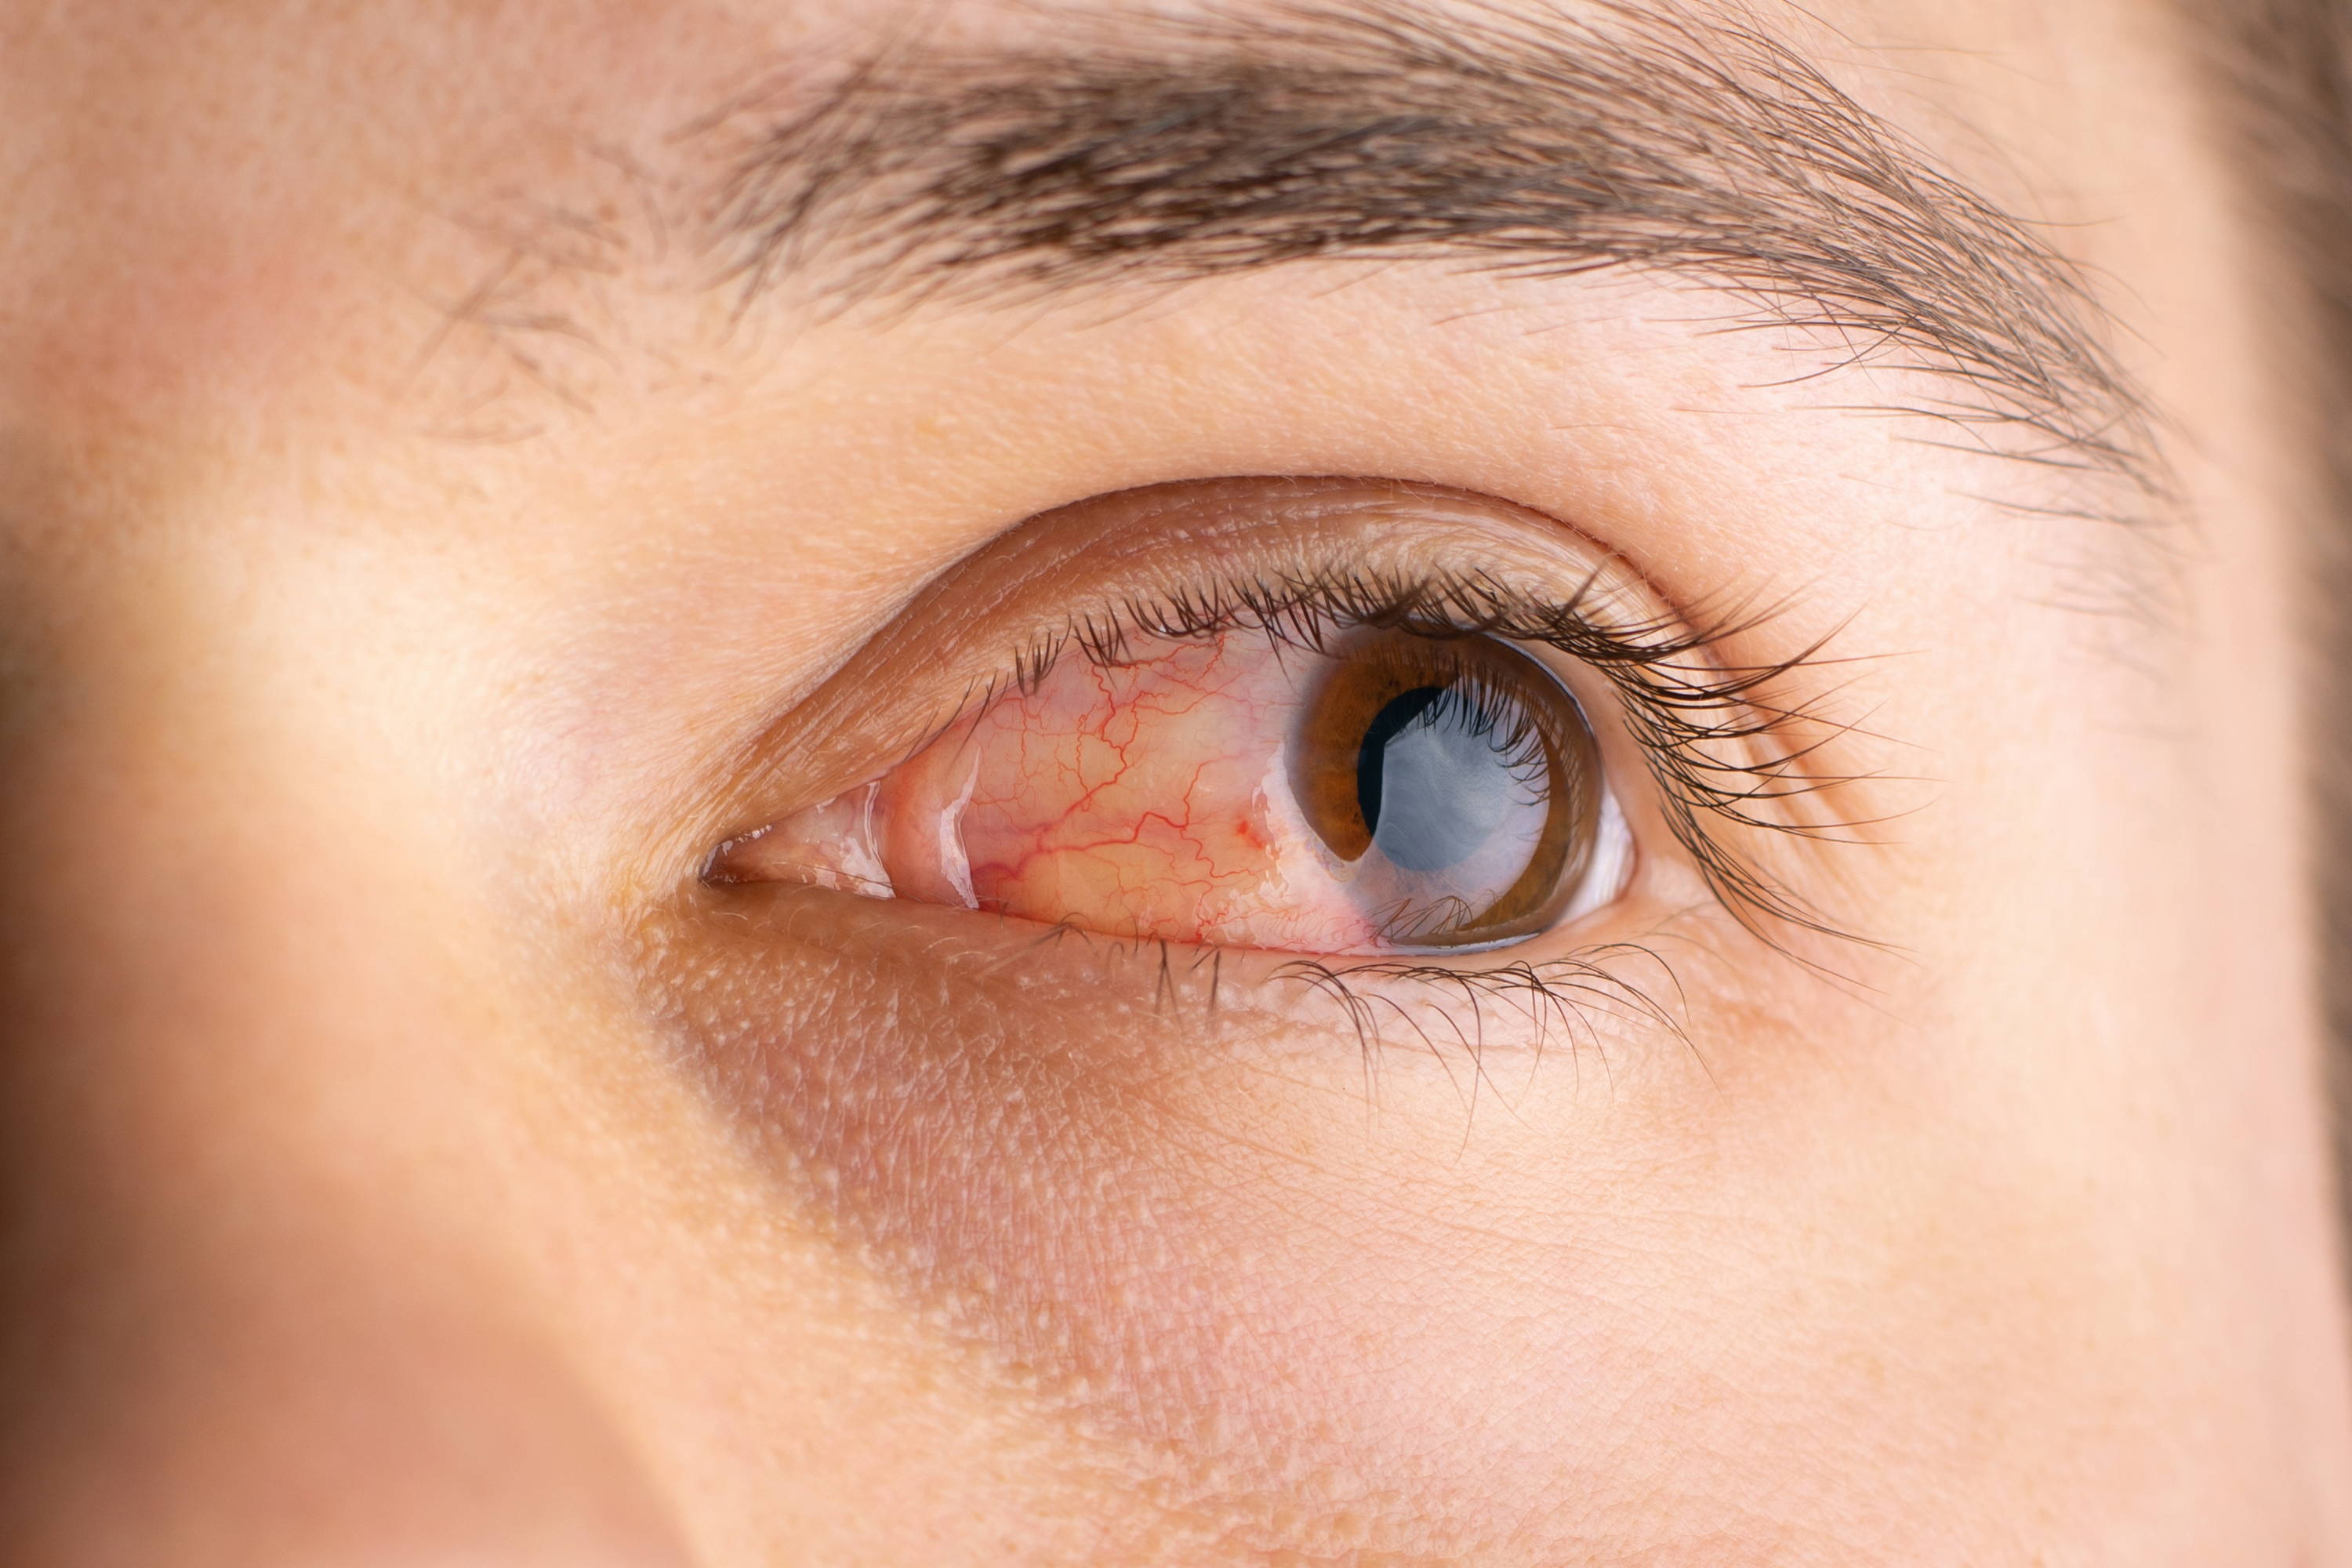  Nærbilde som viser at øyets hvite område er rødt/irritert.